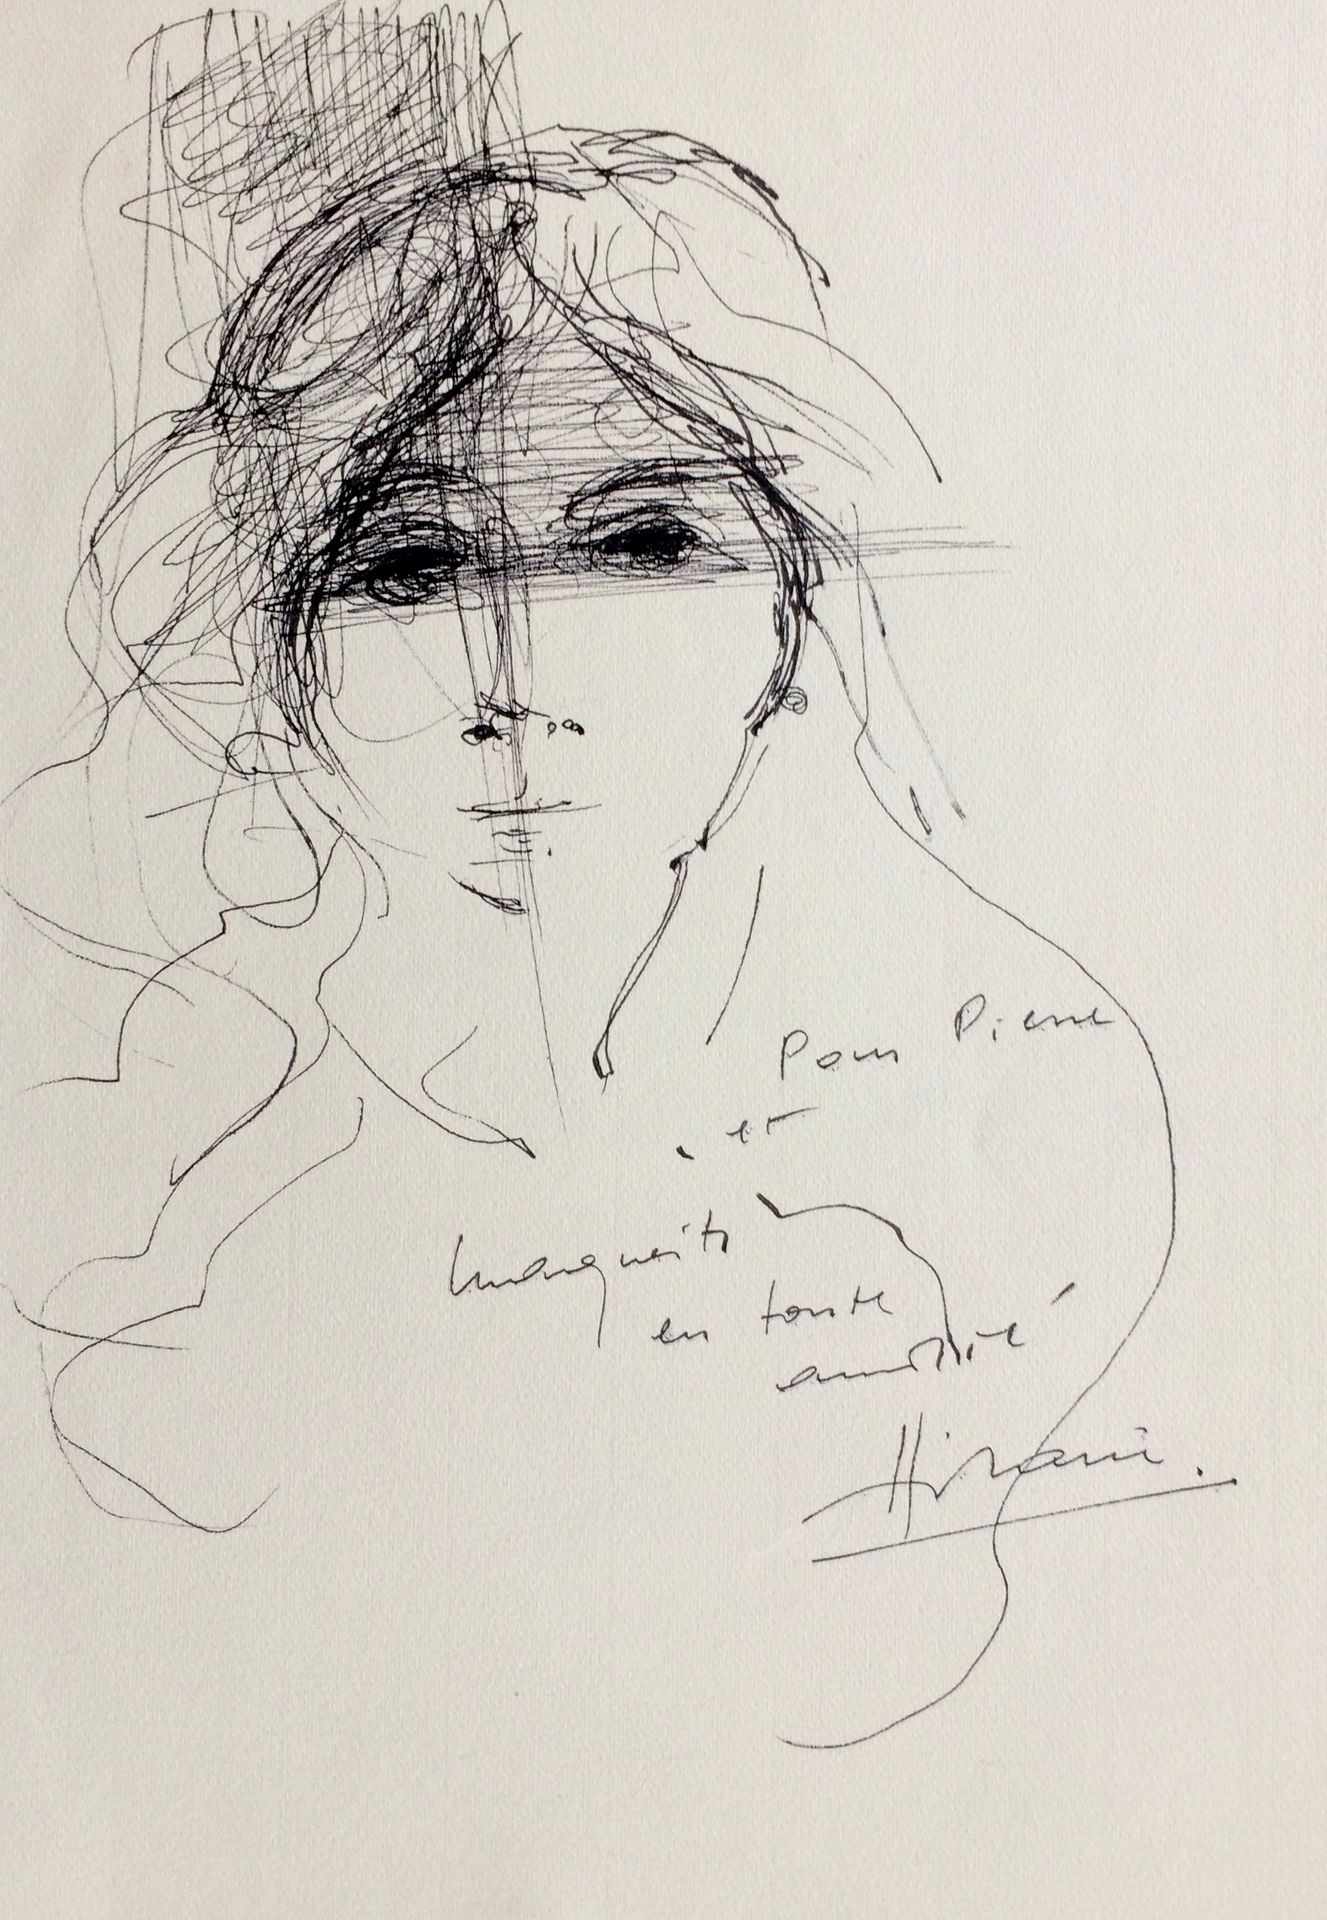 Camille HILAIRE Camille HILAIRE

肖像，1975年

 

原创水墨画，有签名和献词。

尺寸：31.5 x 22 cm

状况&hellip;